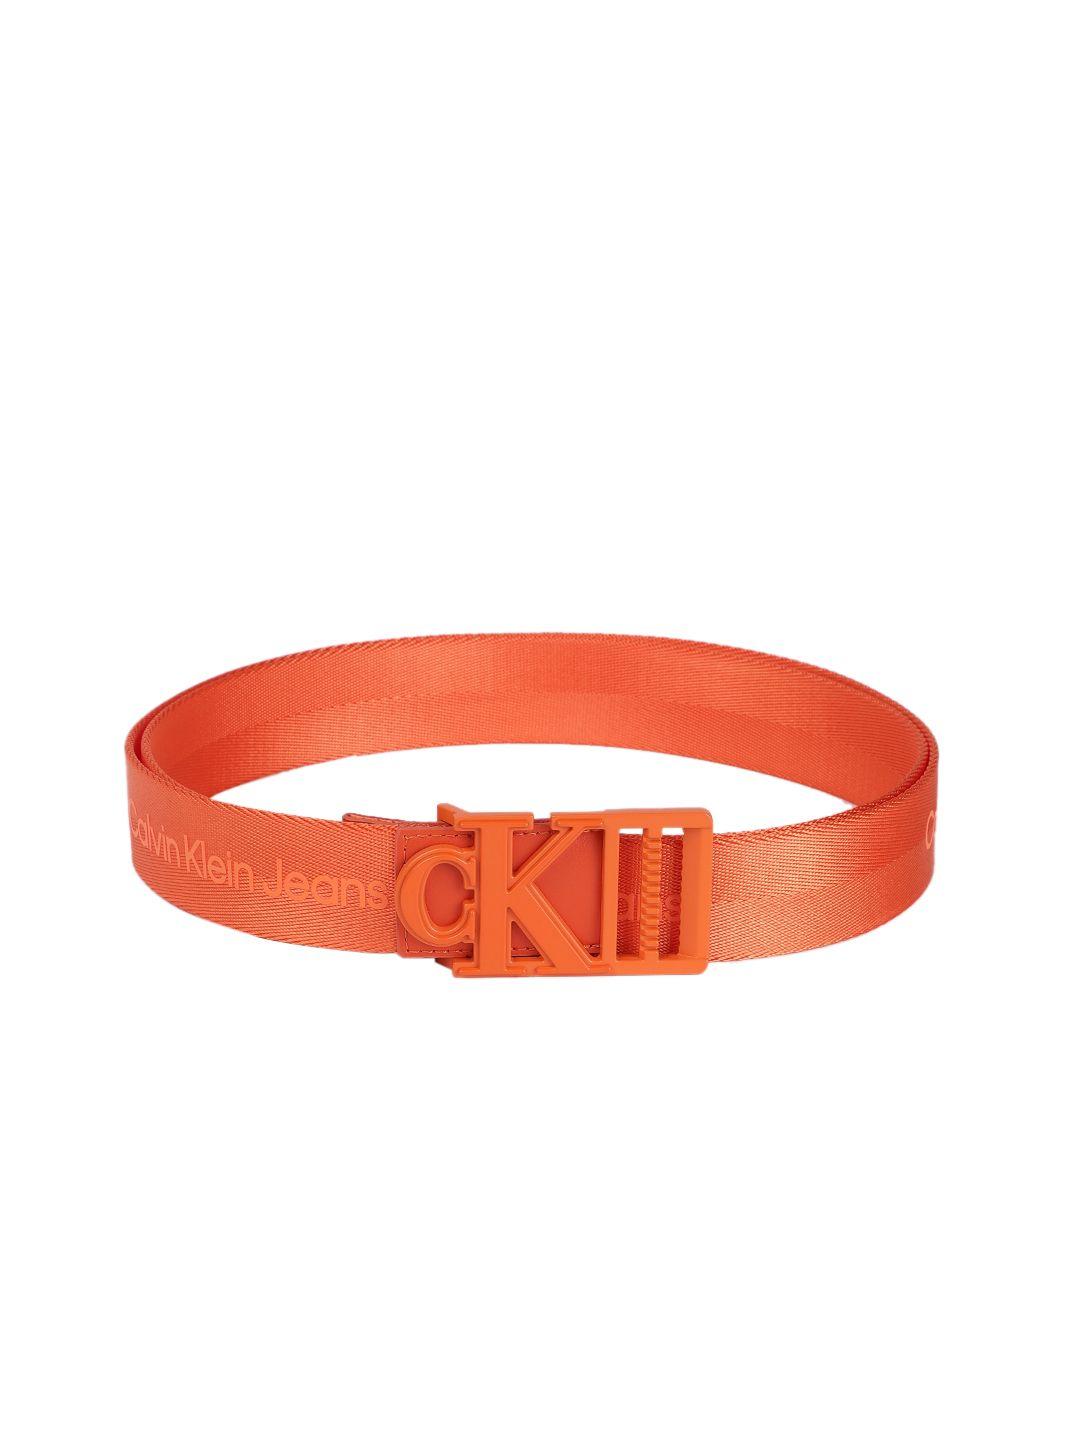 calvin klein men brand logo printed belt